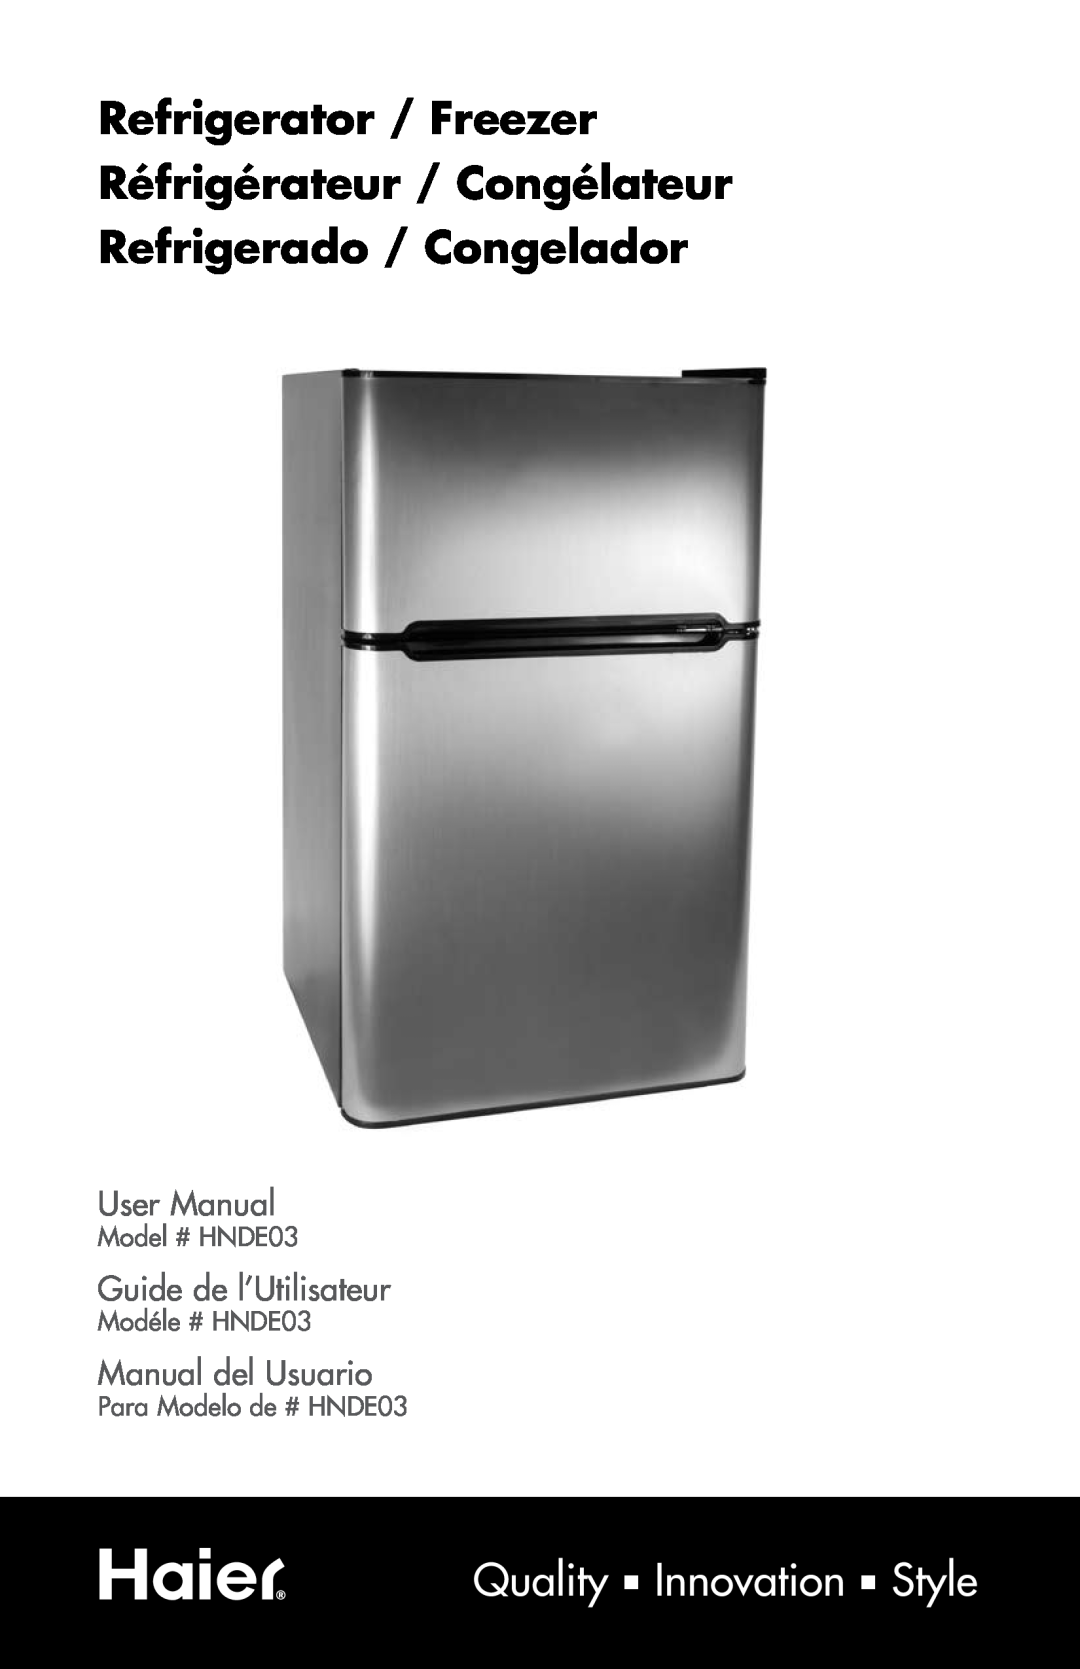 Haier HNDE03 manual Refrigerator / Freezer, Réfrigérateur / Congélateur, Refrigerado / Congelador, Guide de l’Utilisateur 